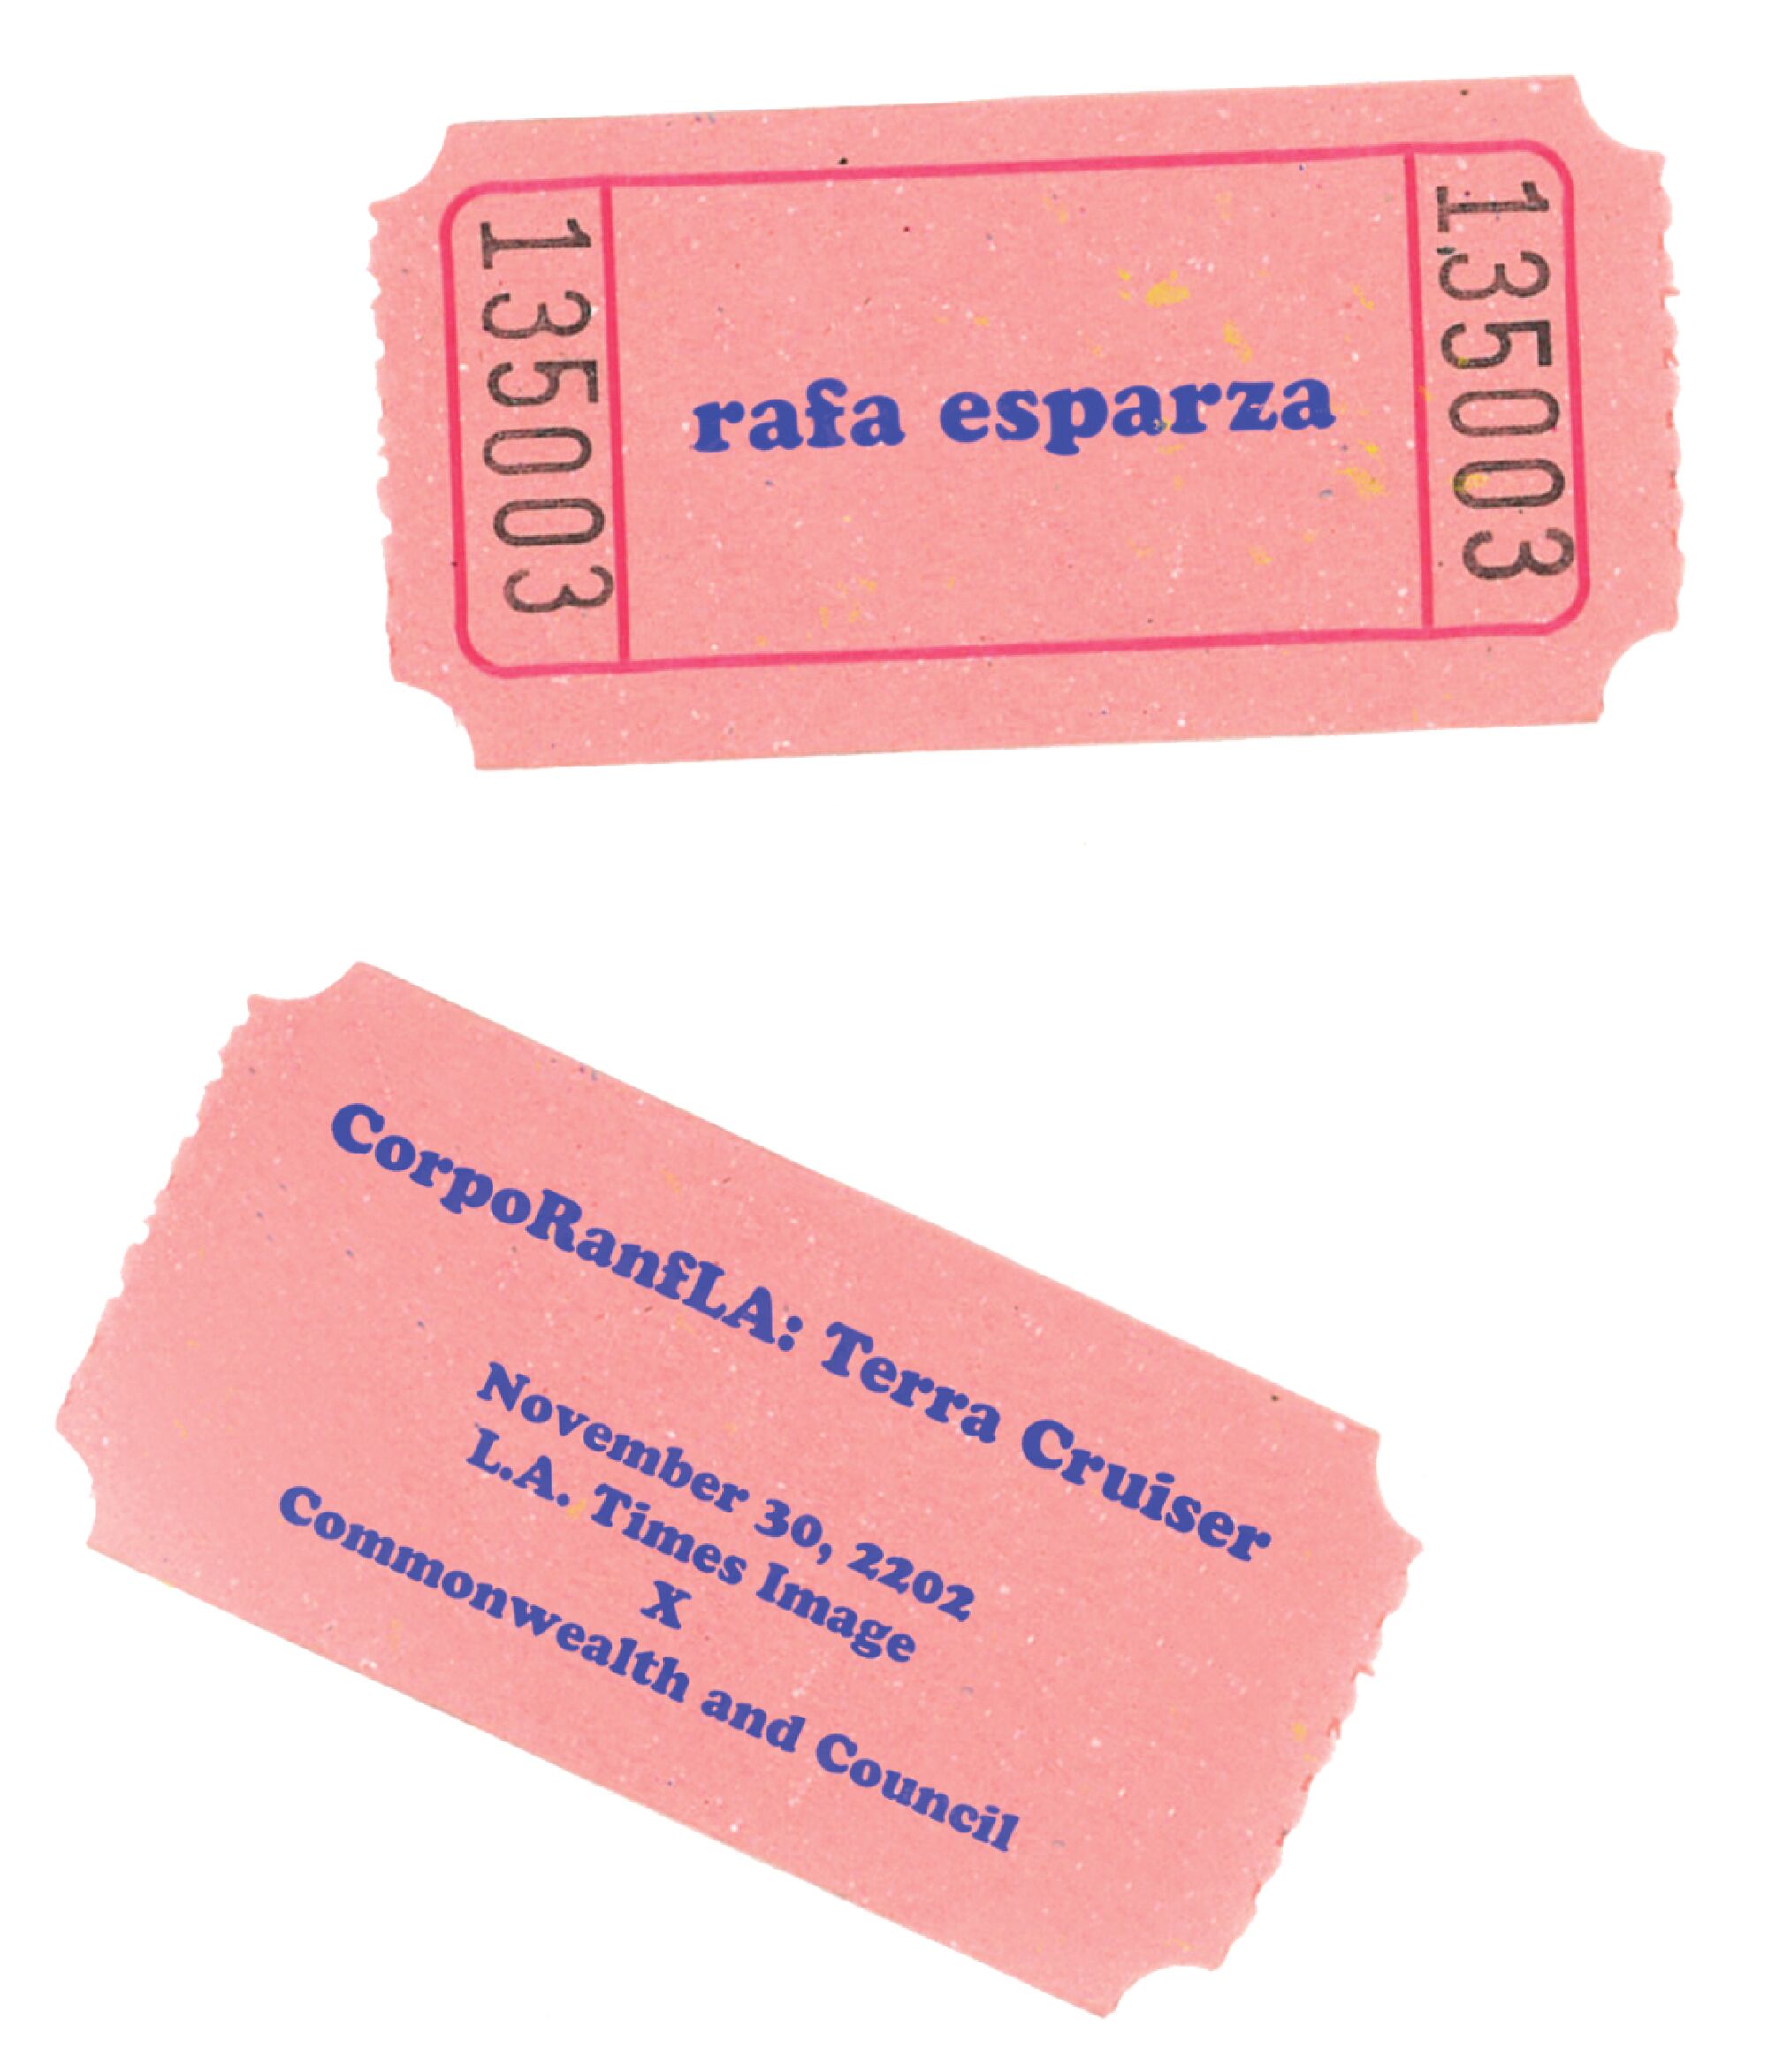 Pink ticket created for CorpoRanfLA: Terra Cruiser.